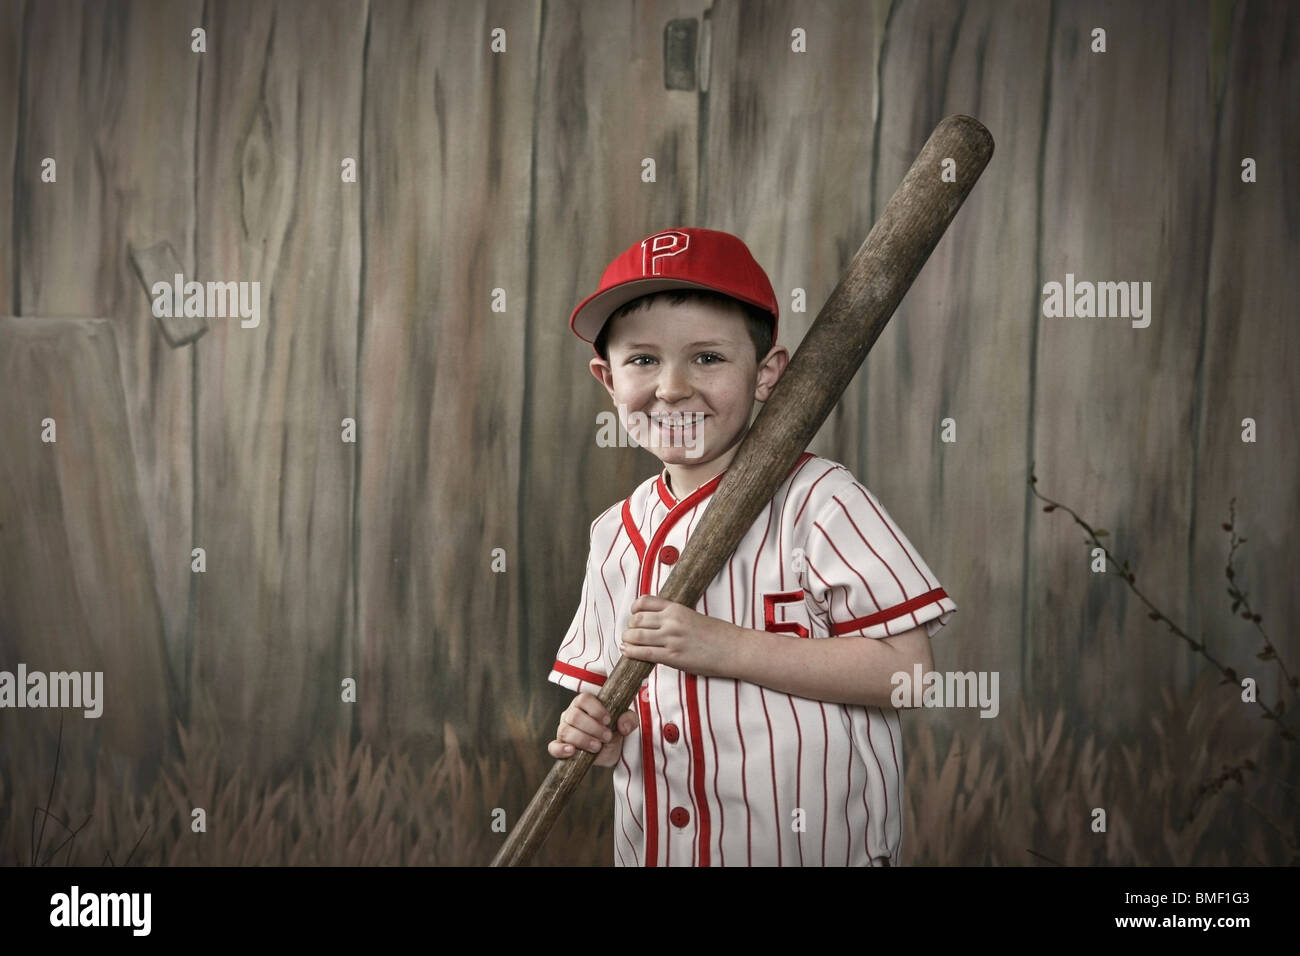 A Boy Wearing A Baseball Uniform And Holding A Bat Stock Photo